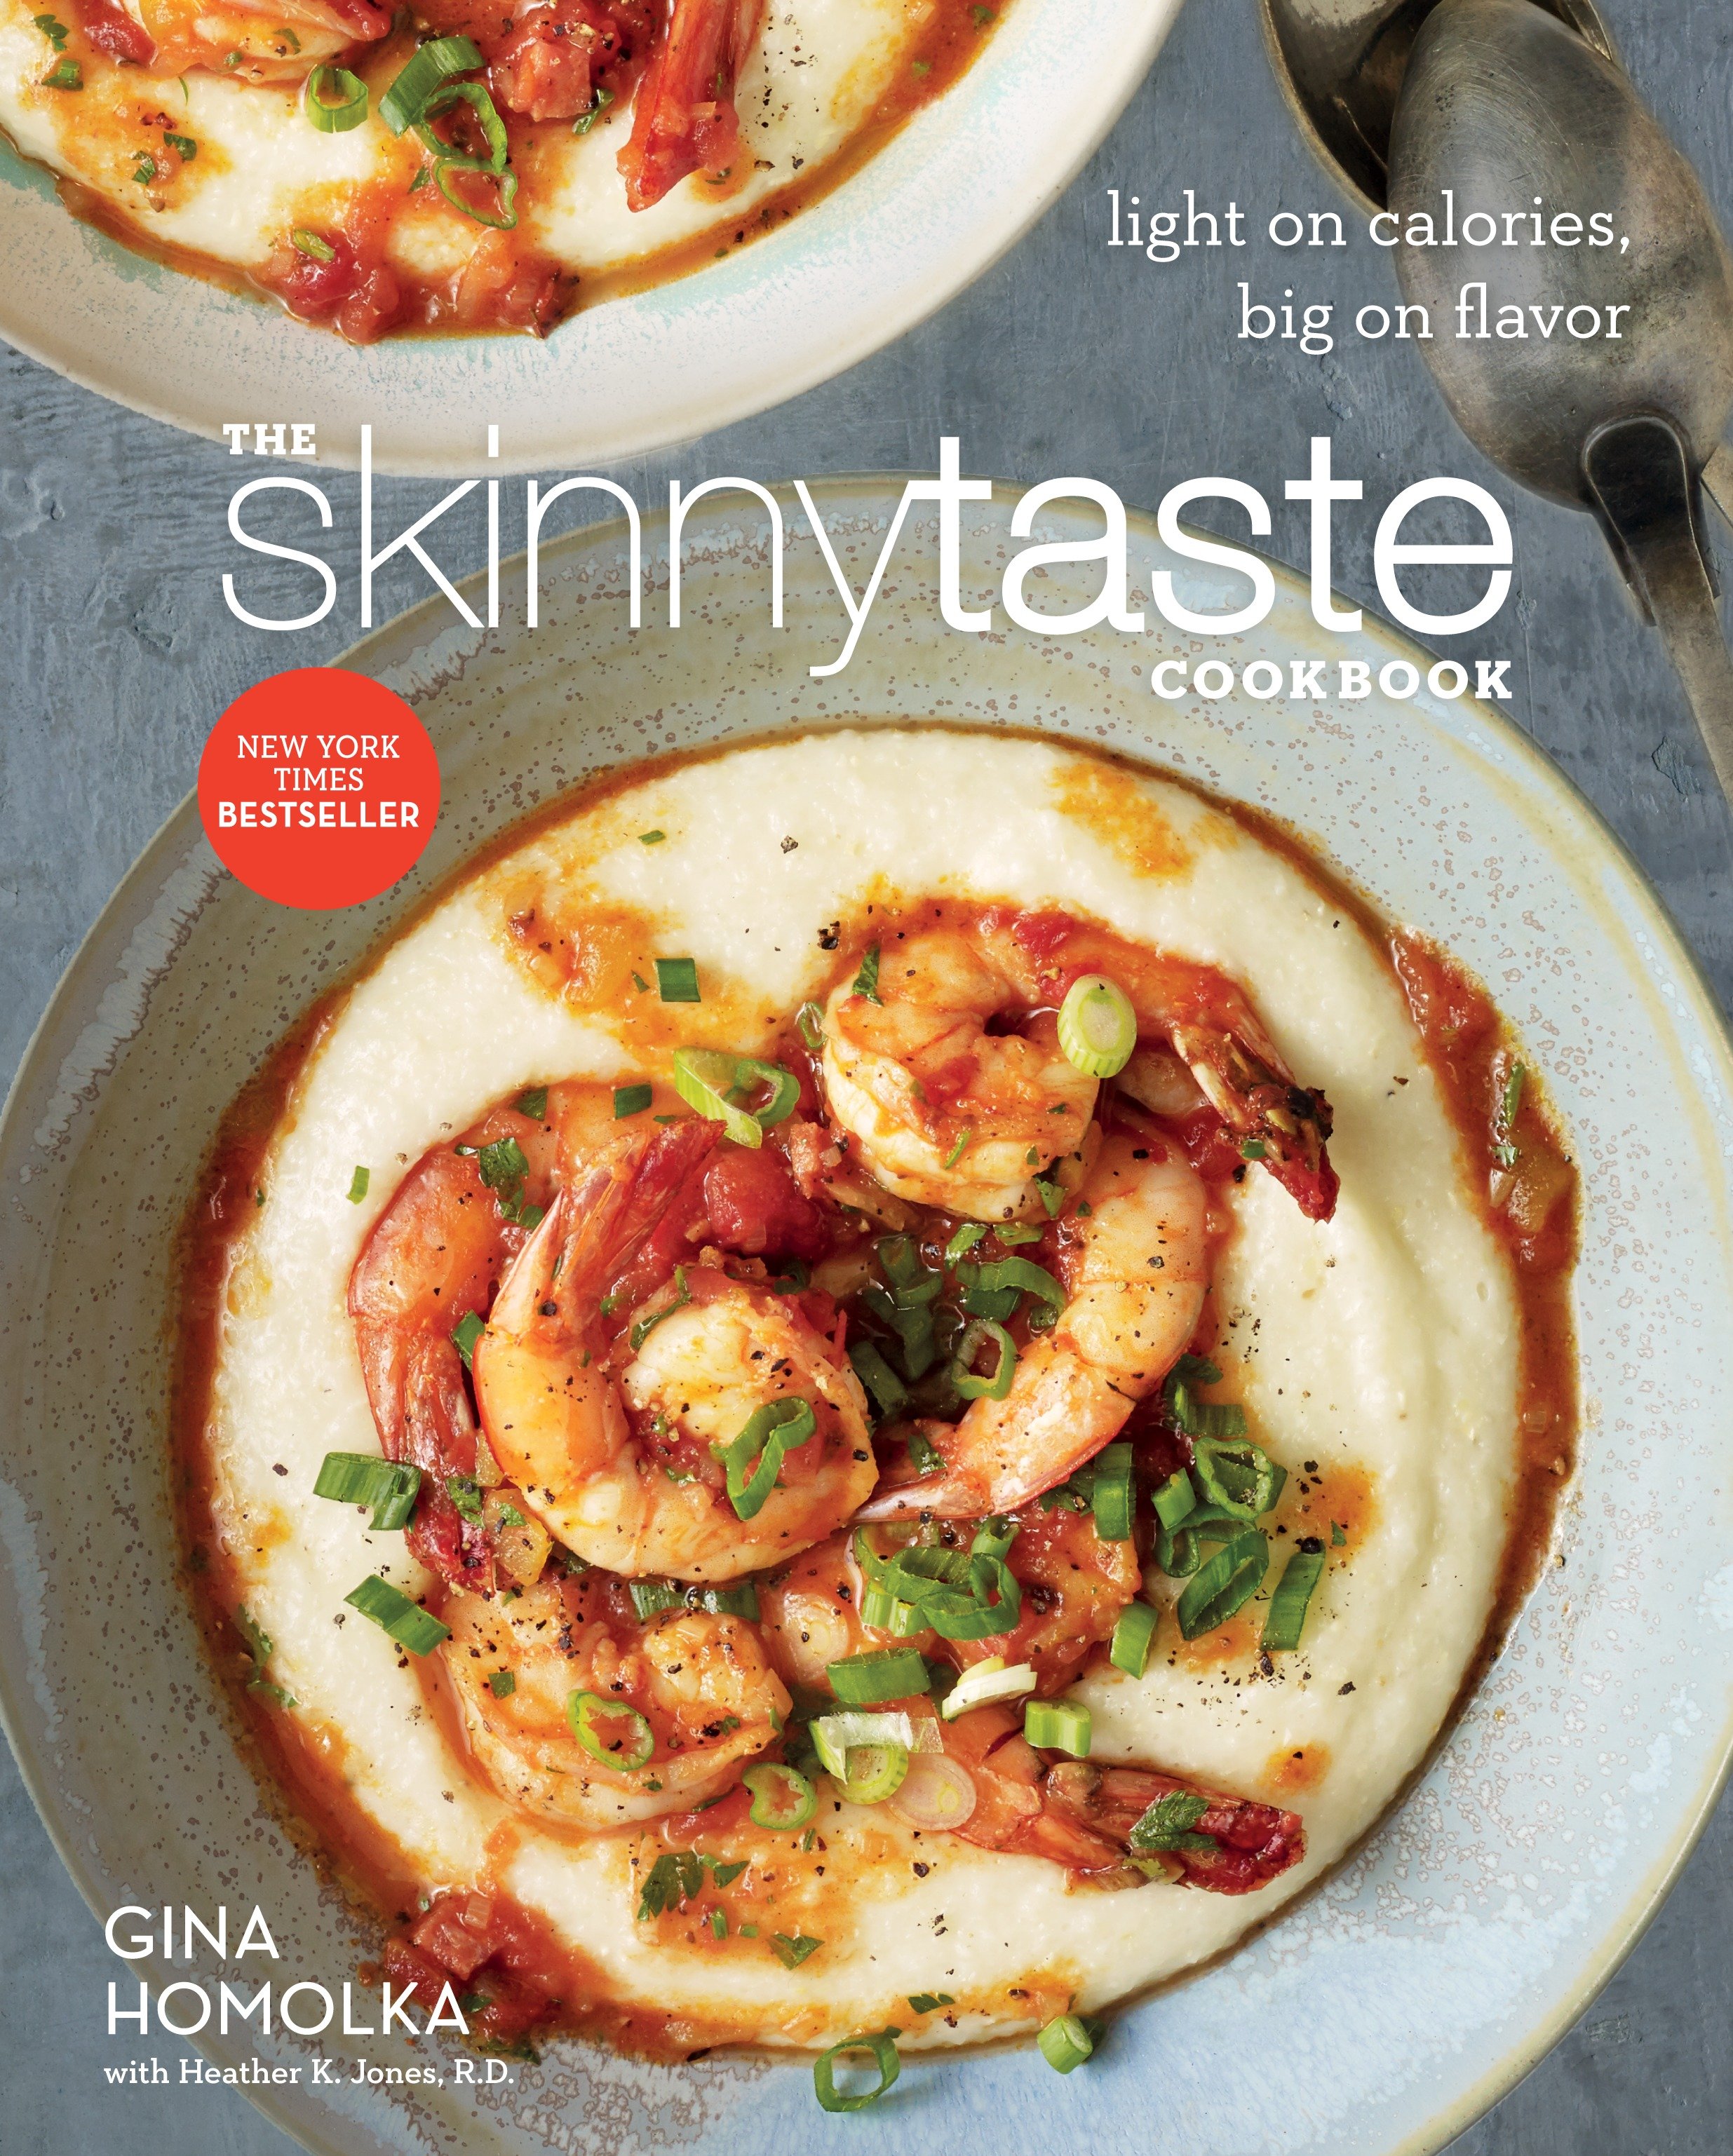 The skinnytaste cookbook light on calories, big on flavor cover image